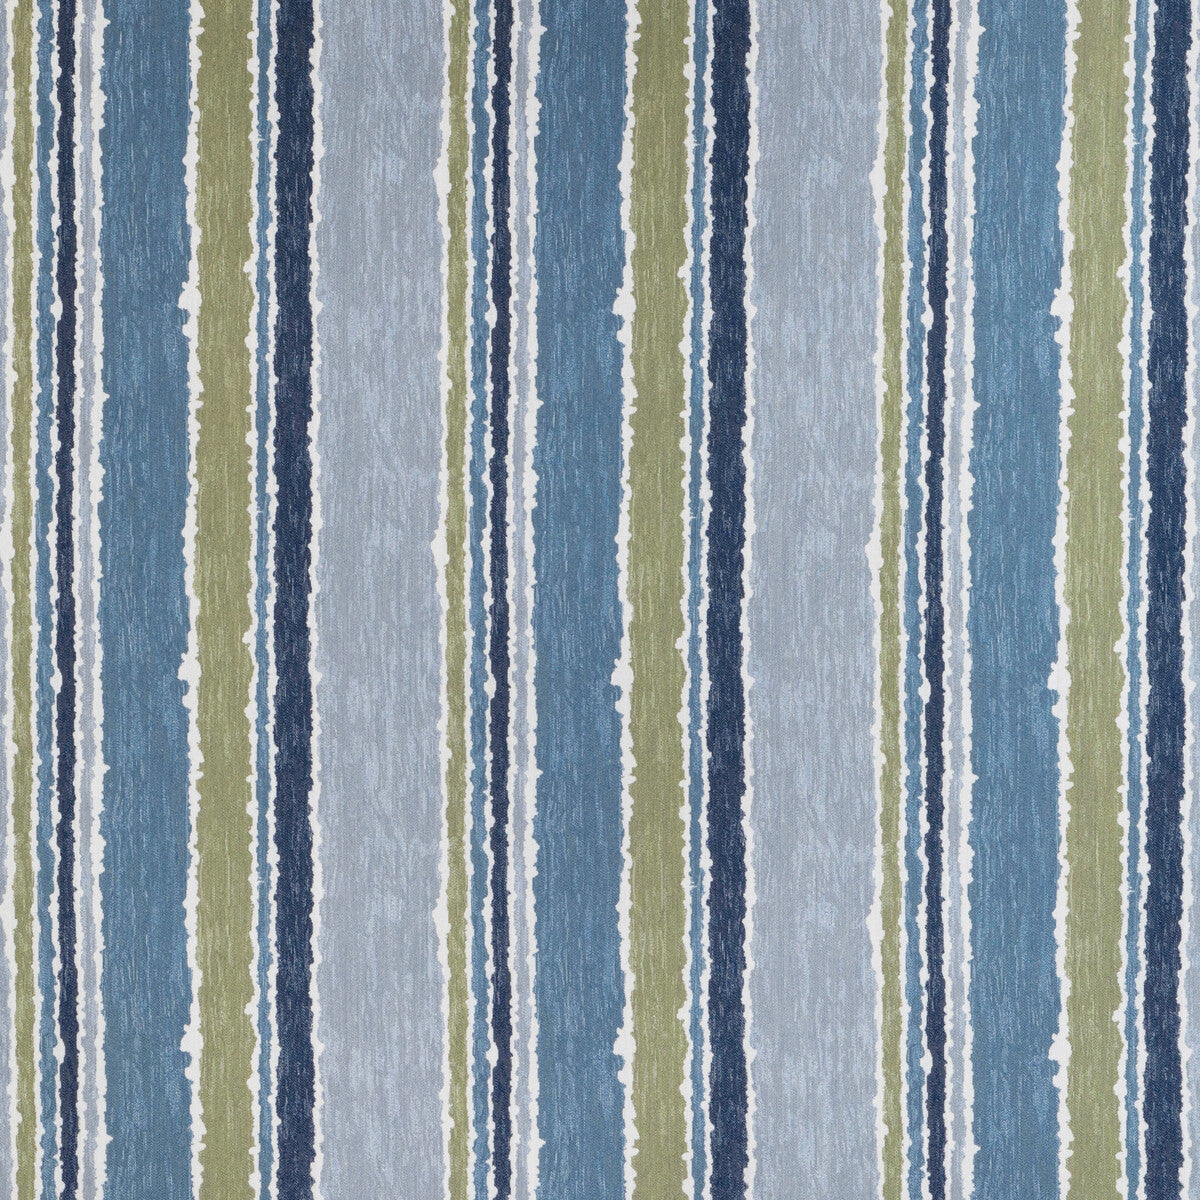 Kravet Design fabric in 36796-530 color - pattern 36796.530.0 - by Kravet Design in the Sea Island Indoor/Outdoor collection